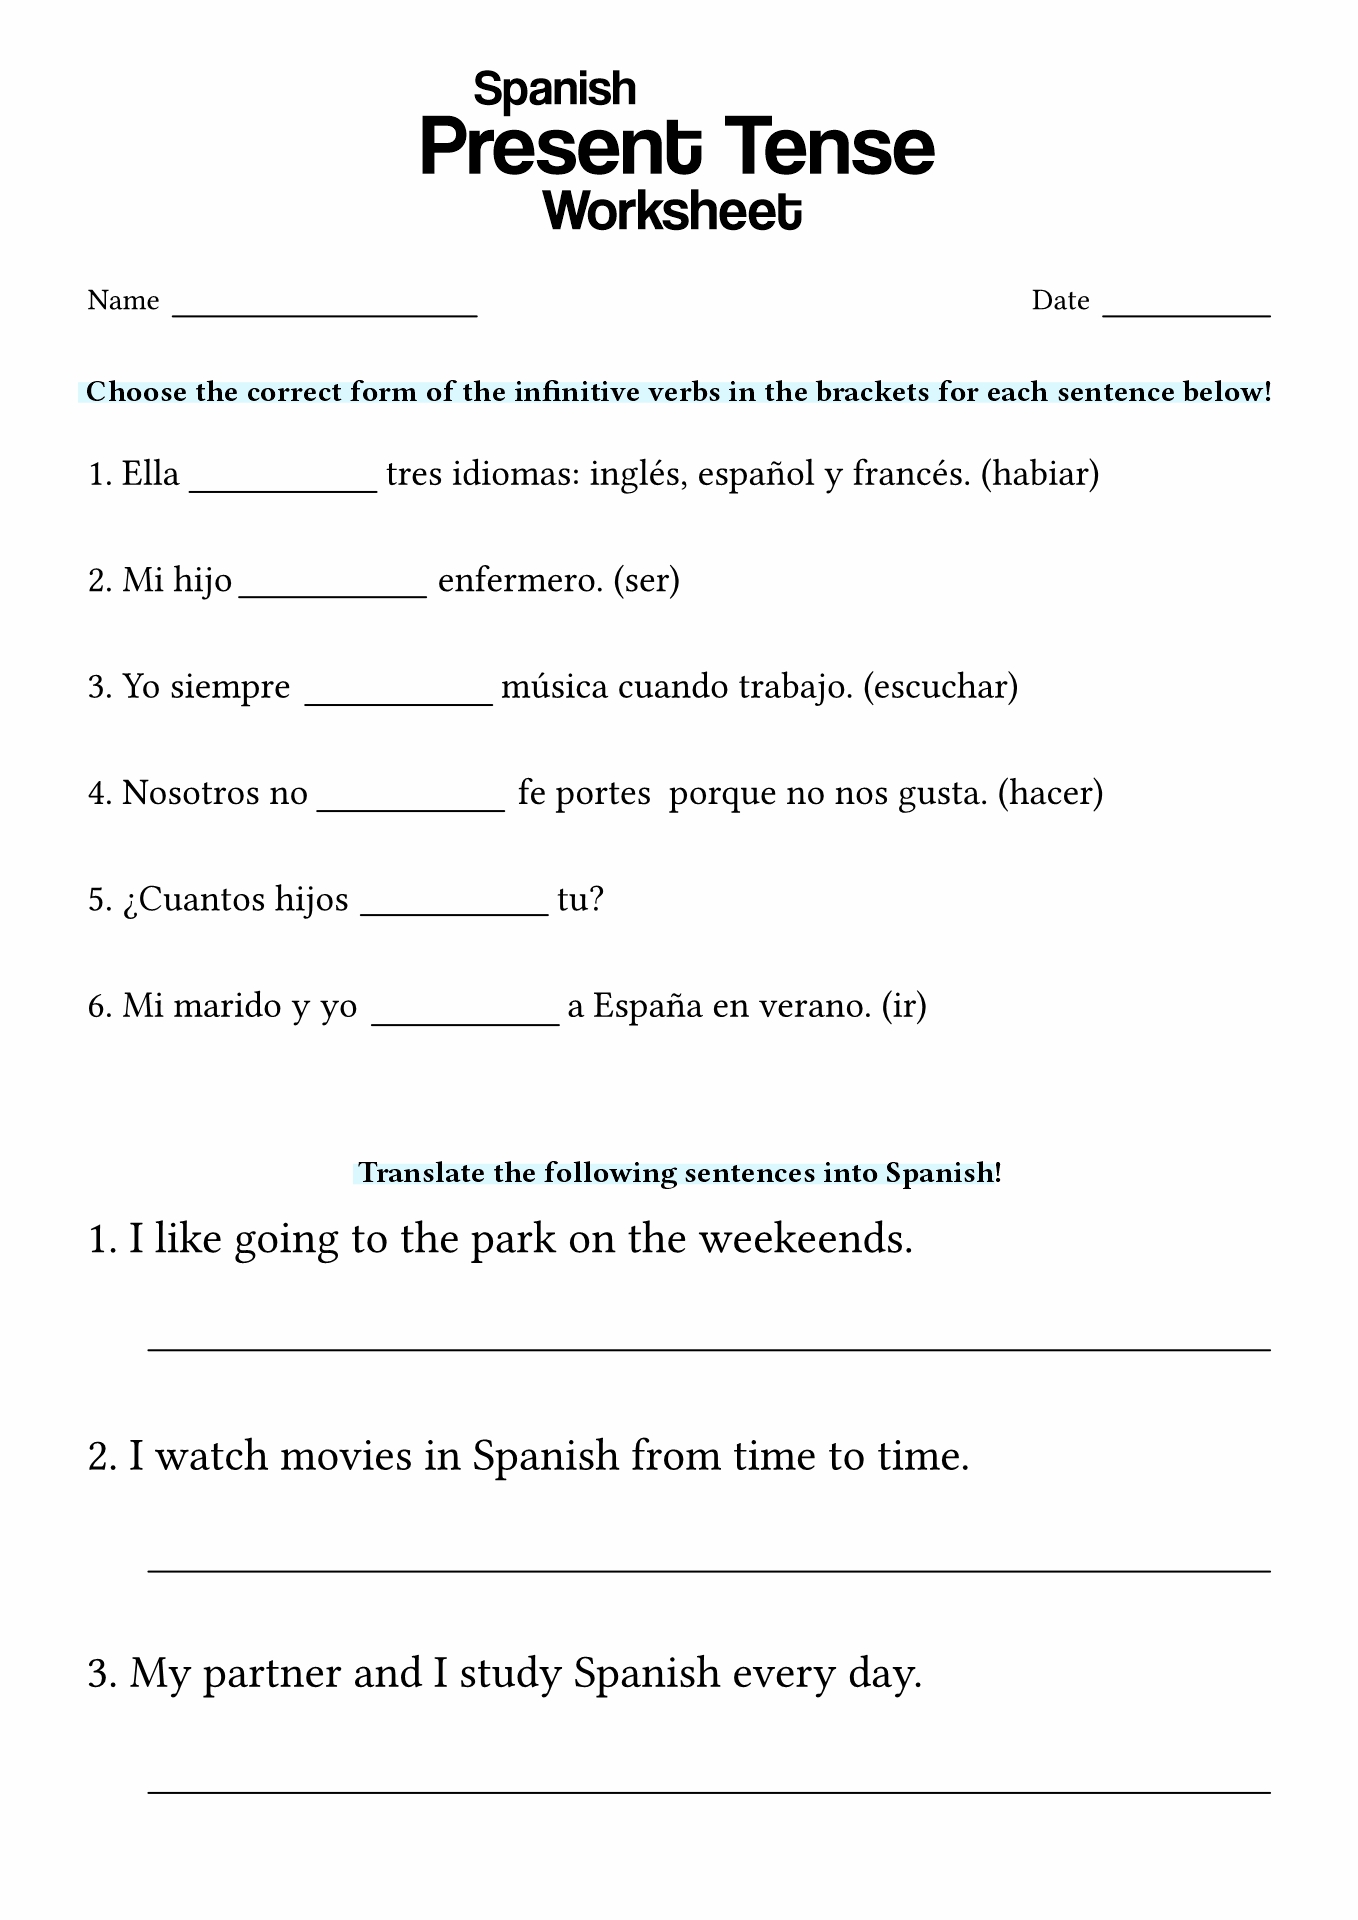 Spanish Present Tense Verbs Worksheets Pdf